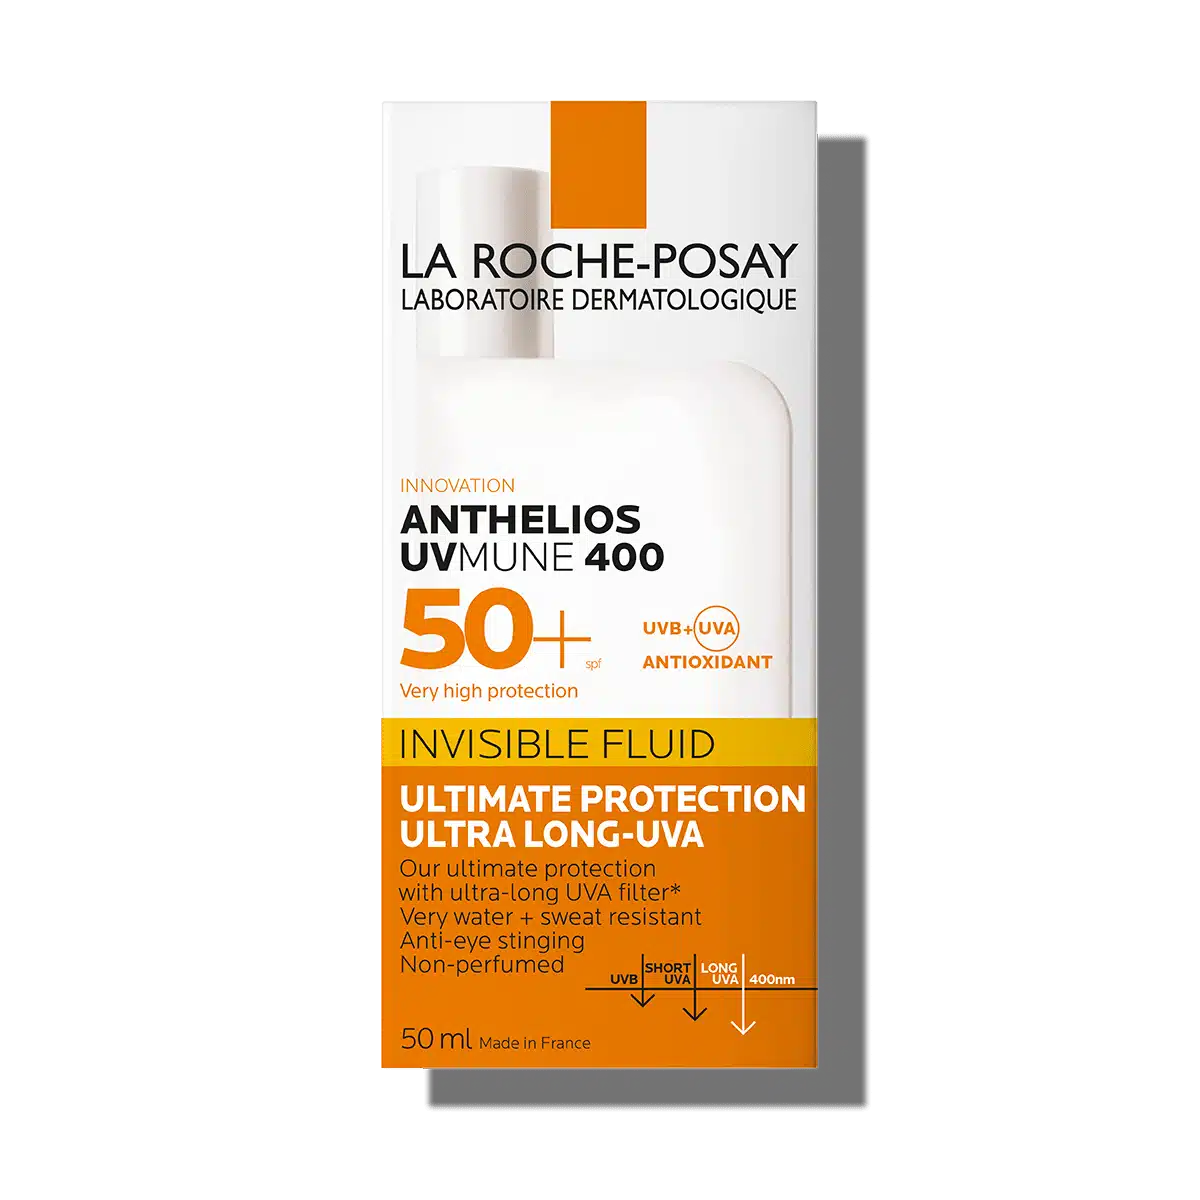 La Roche-Posay Anthelios UV Mune 400